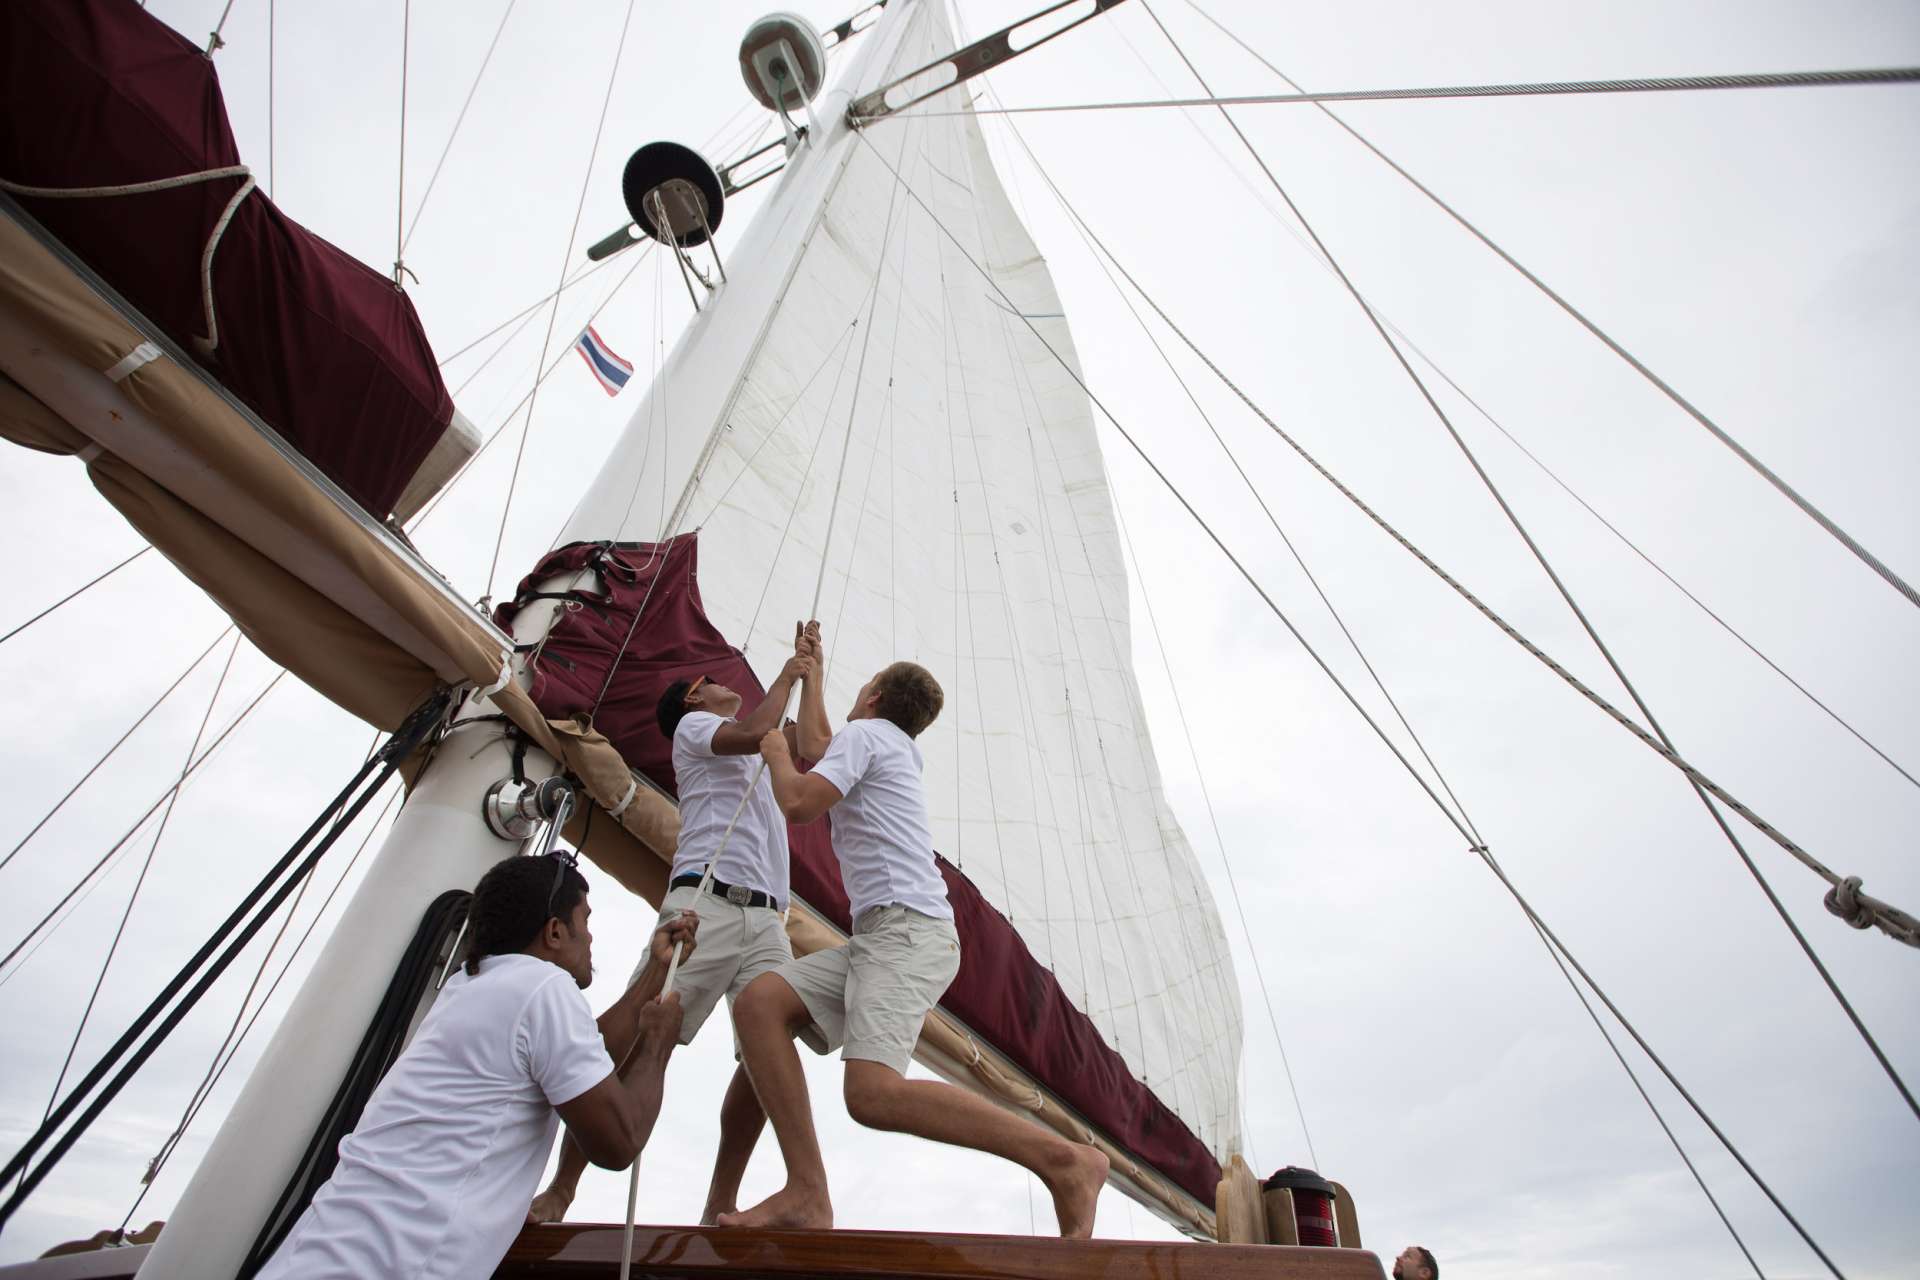 Hoisting the sails